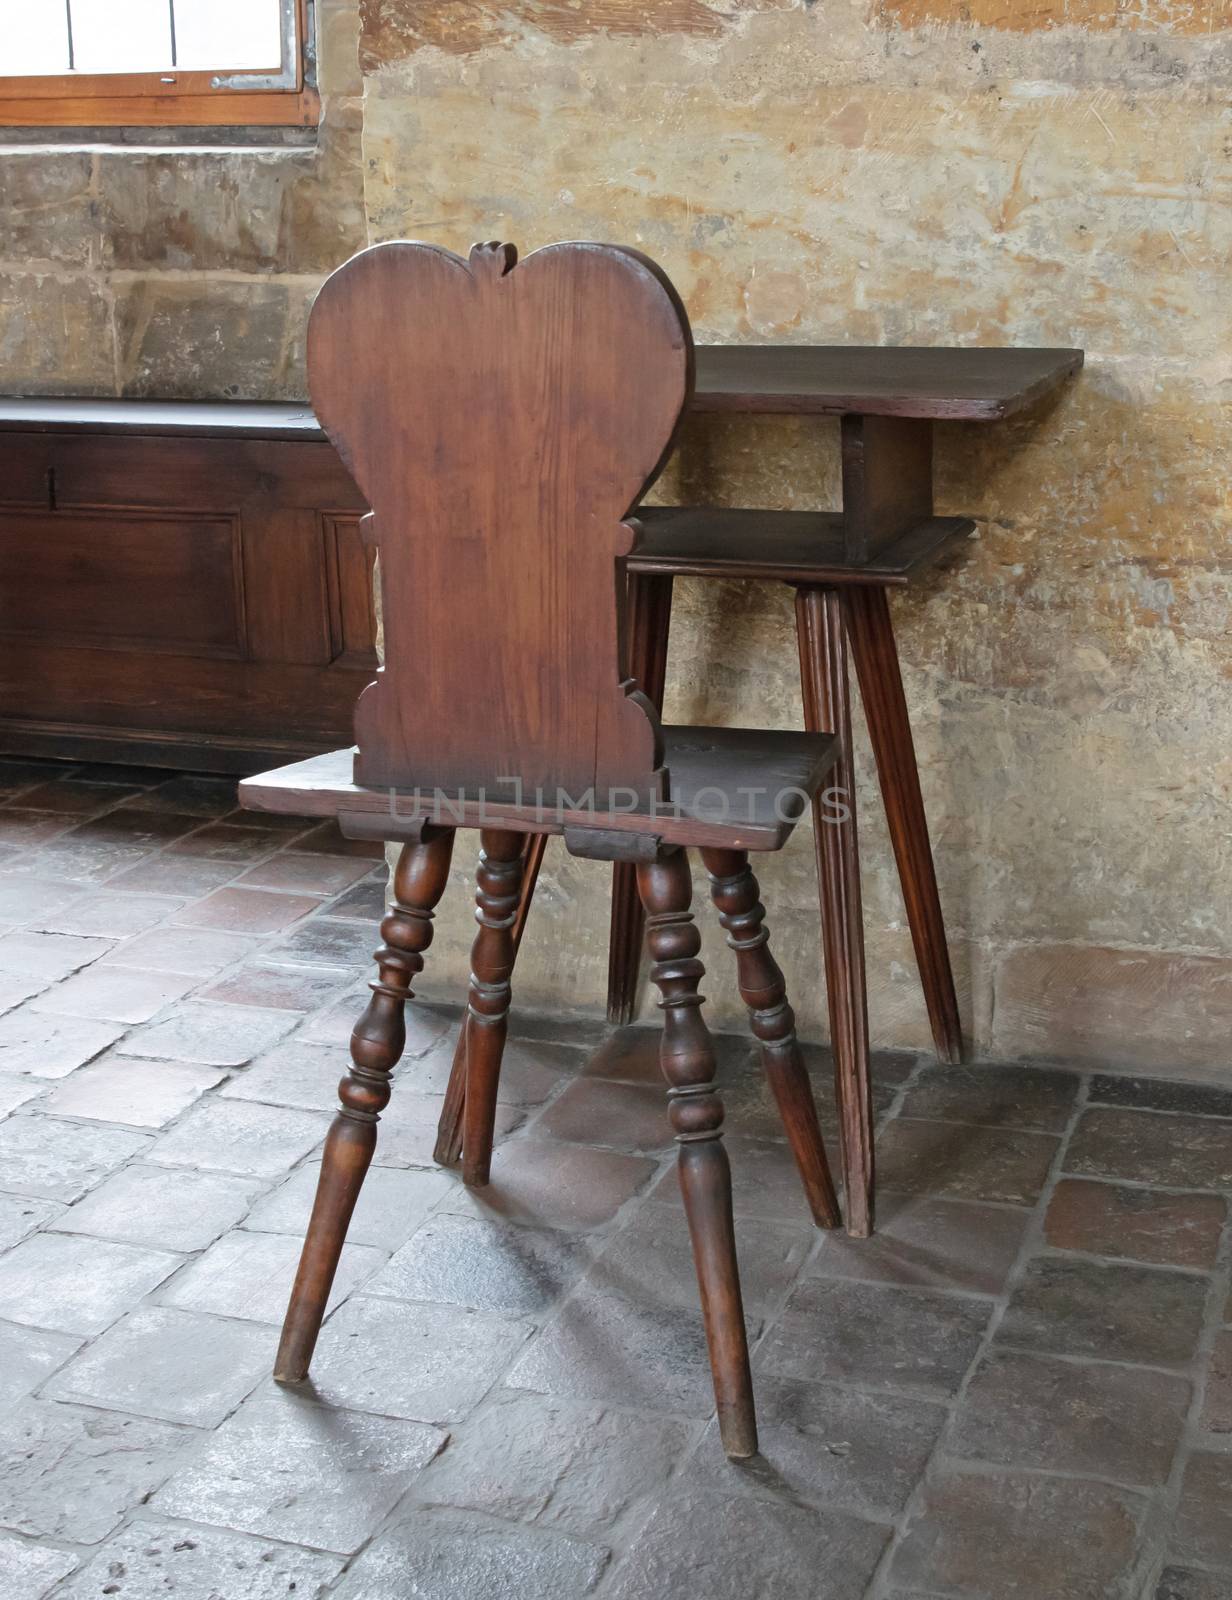 Antique desk in a castle by michaklootwijk